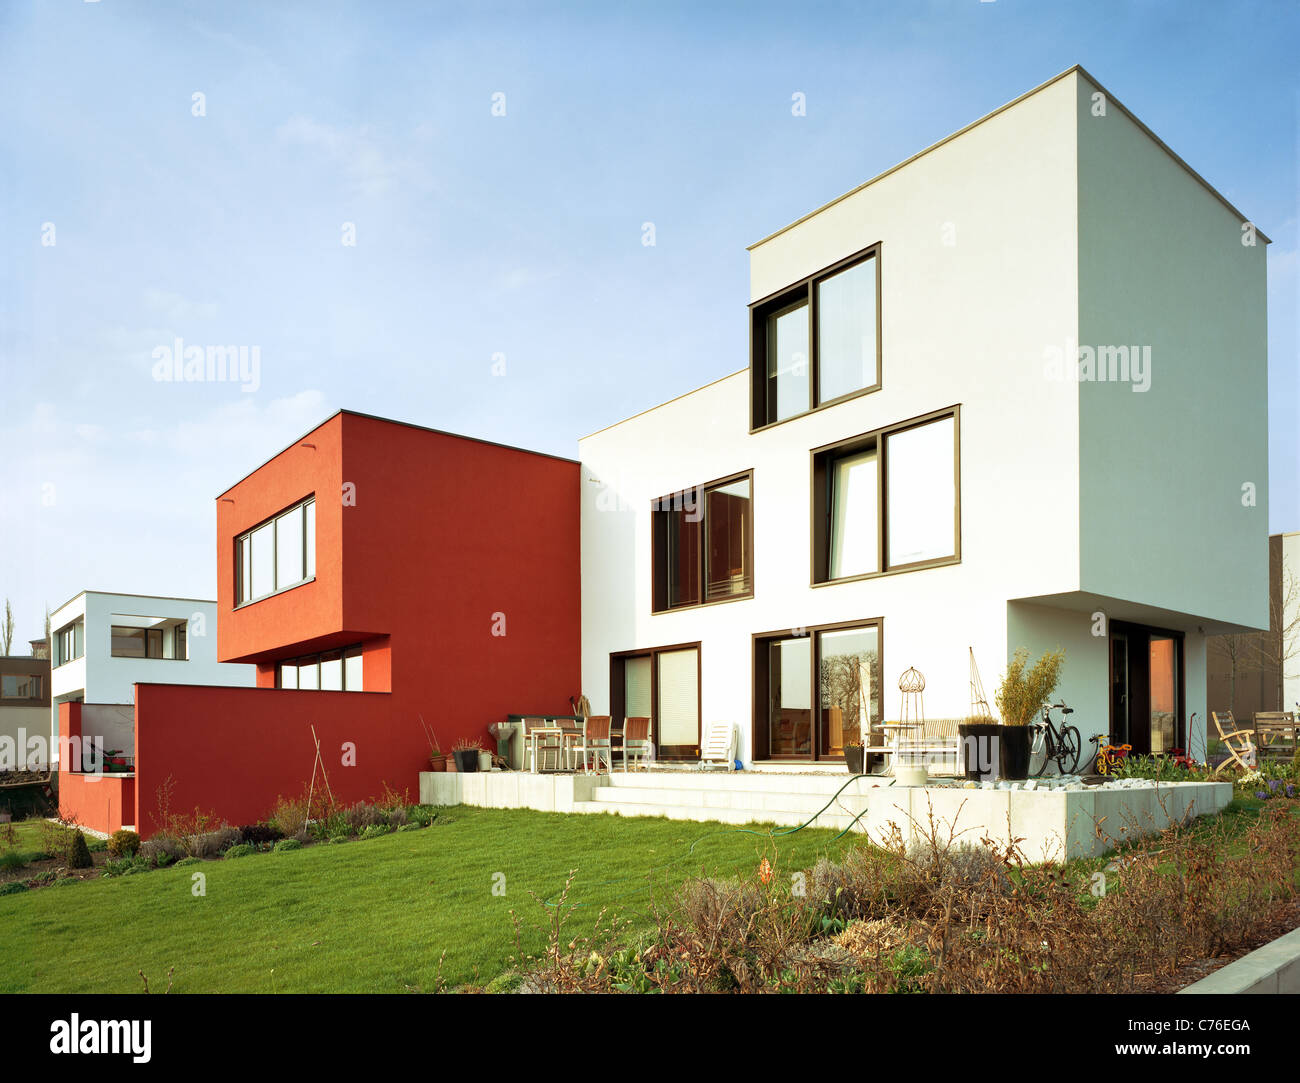 Neues Bauen am Horn, Haus Seeger, Weimar, Germany Stock Photo